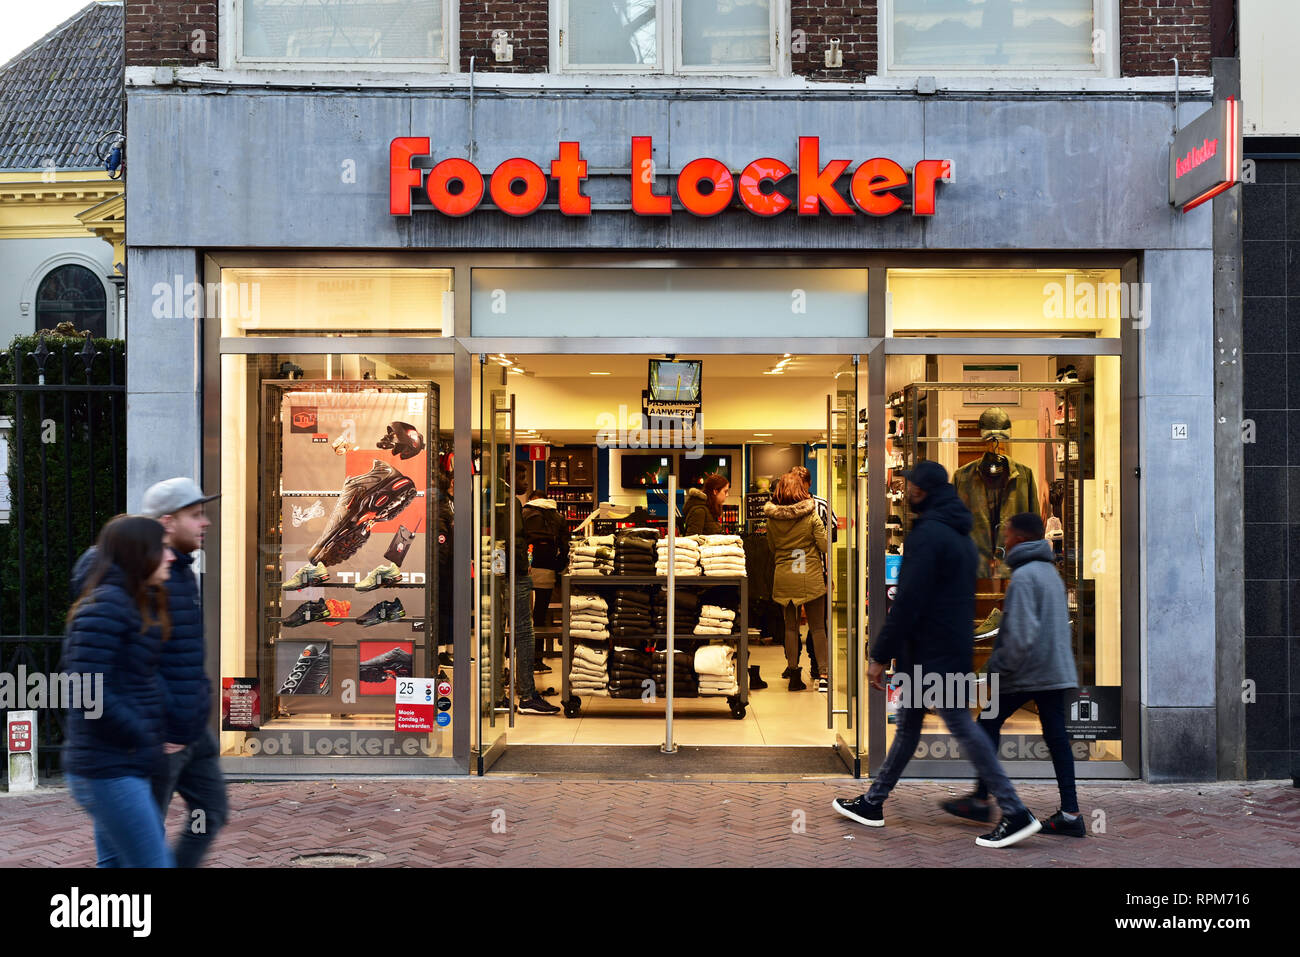 Foot Locker store display window Stock Photo